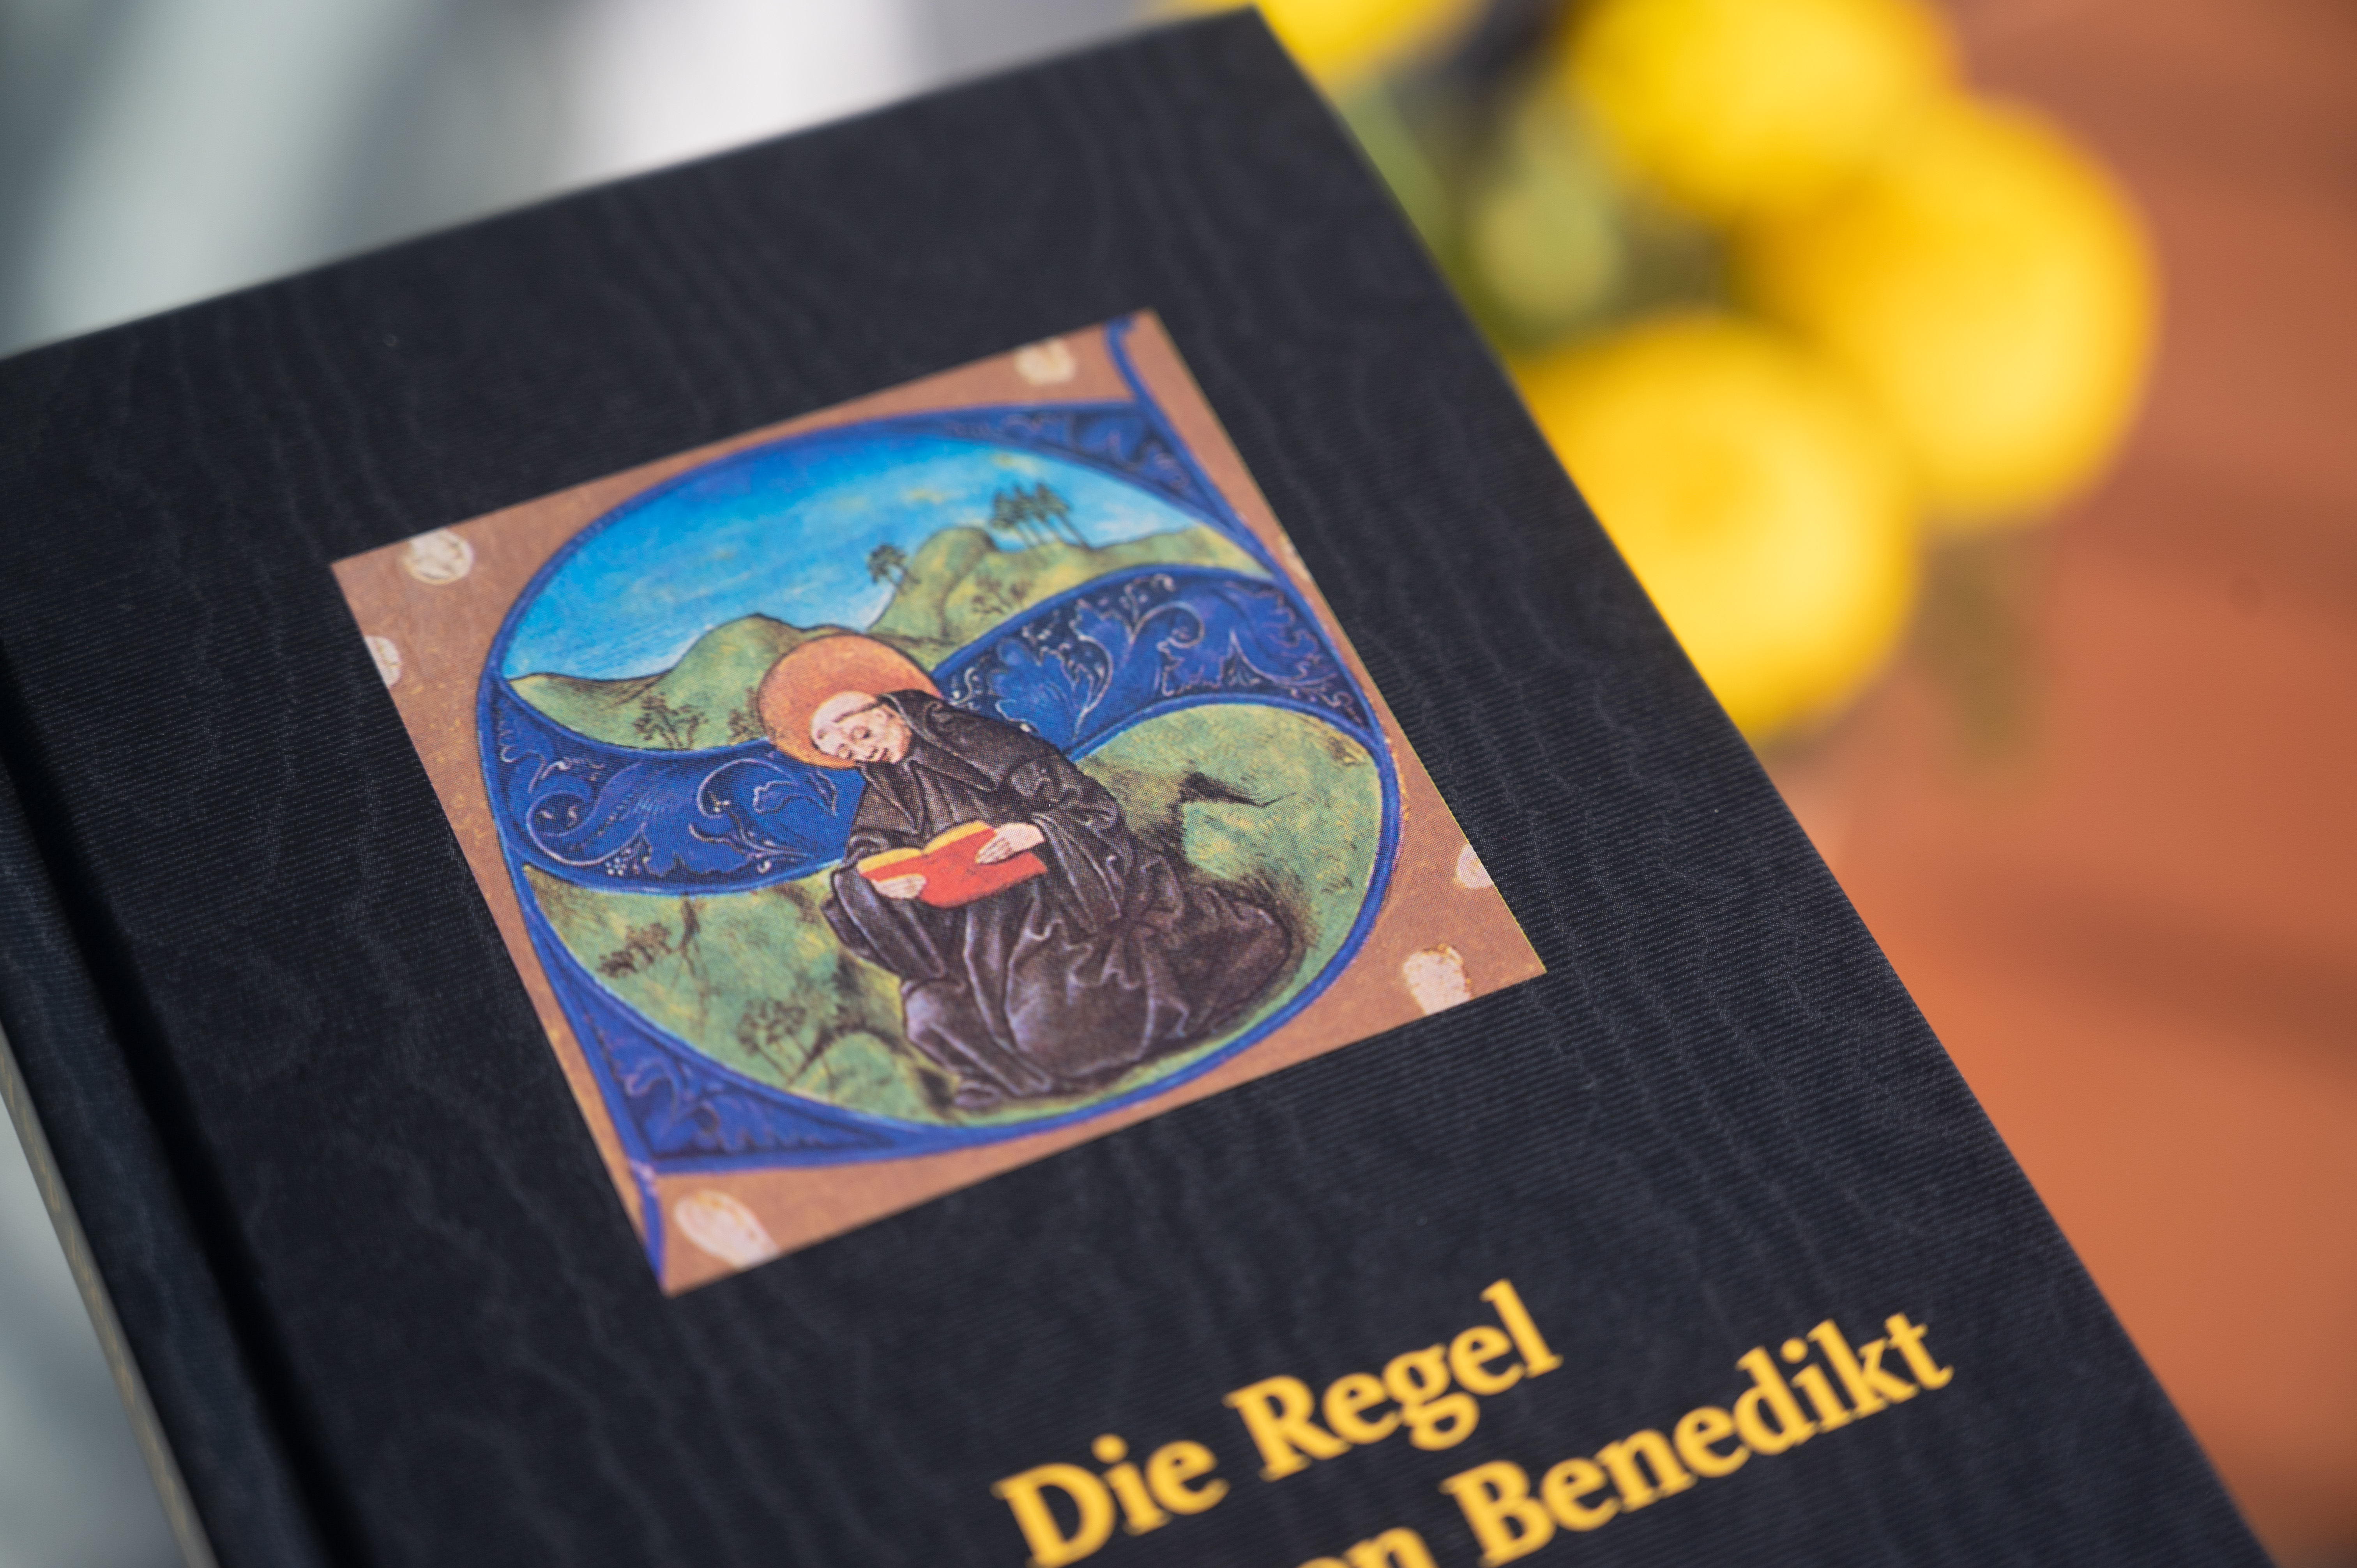 Die Regel des heiligen Benedikt - Normalausgabe - Der Klassiker!